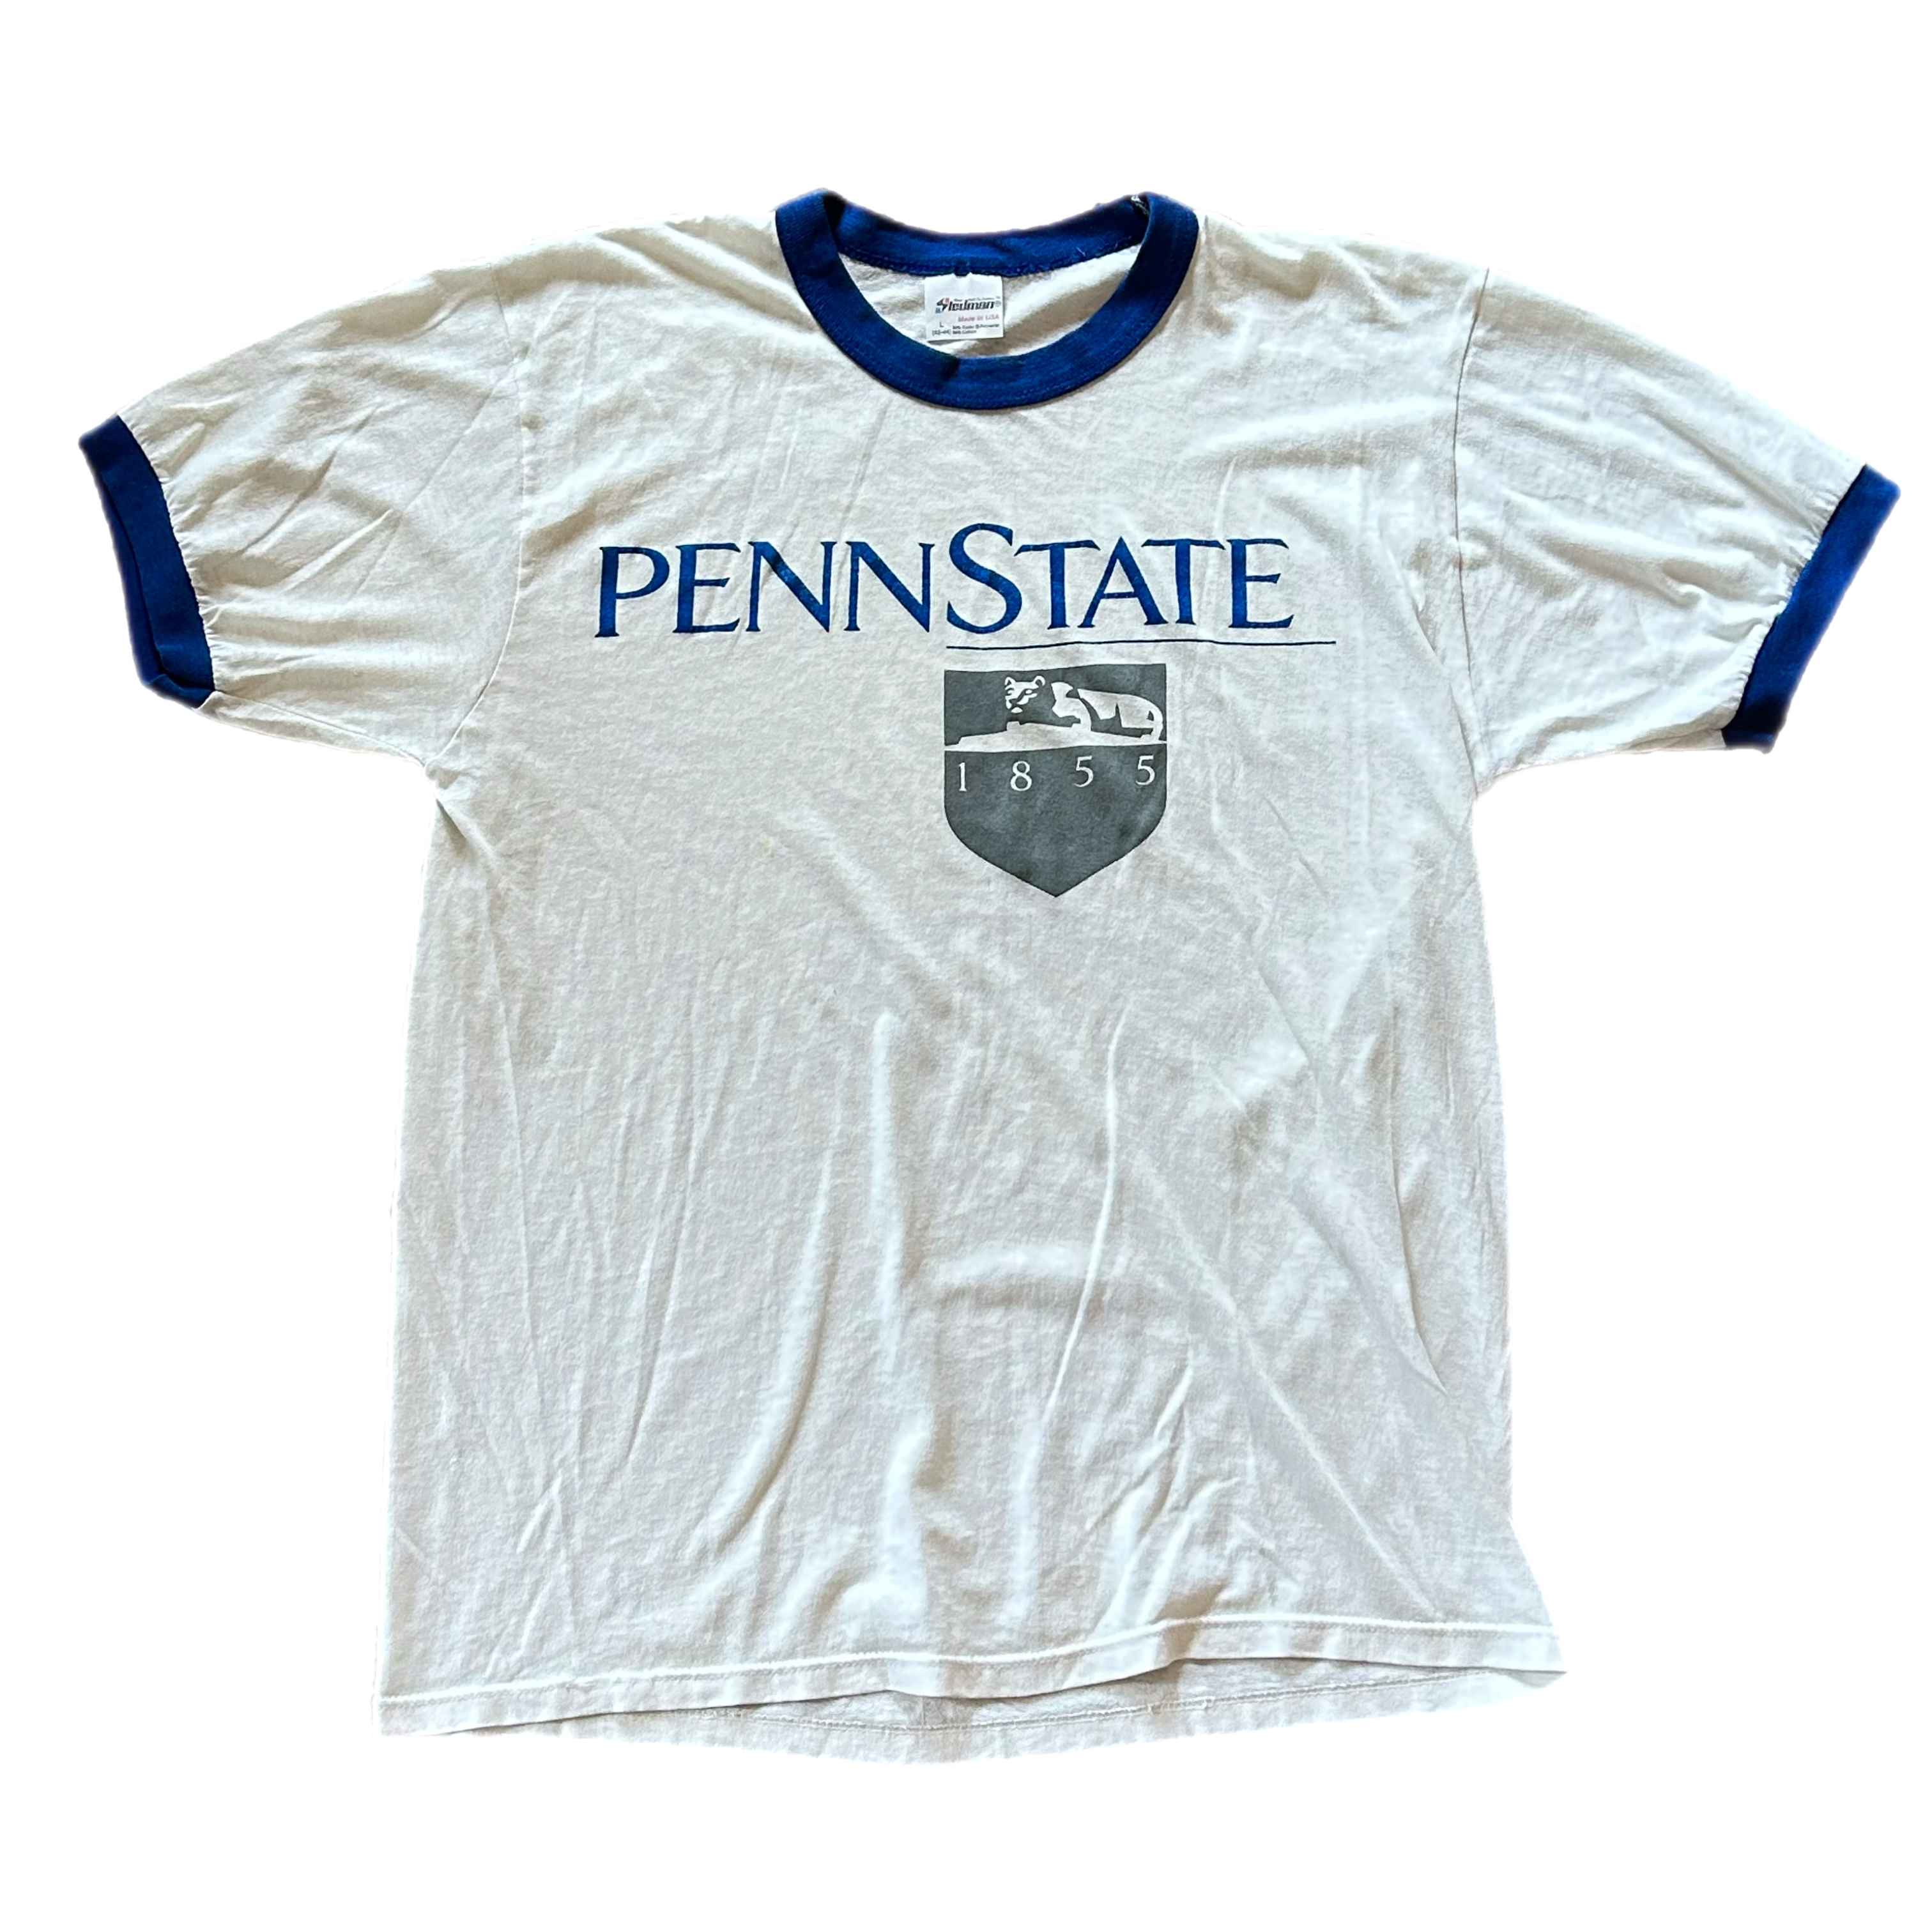 Vintage 1980s Penn State Nittany Lions Ringer Tee